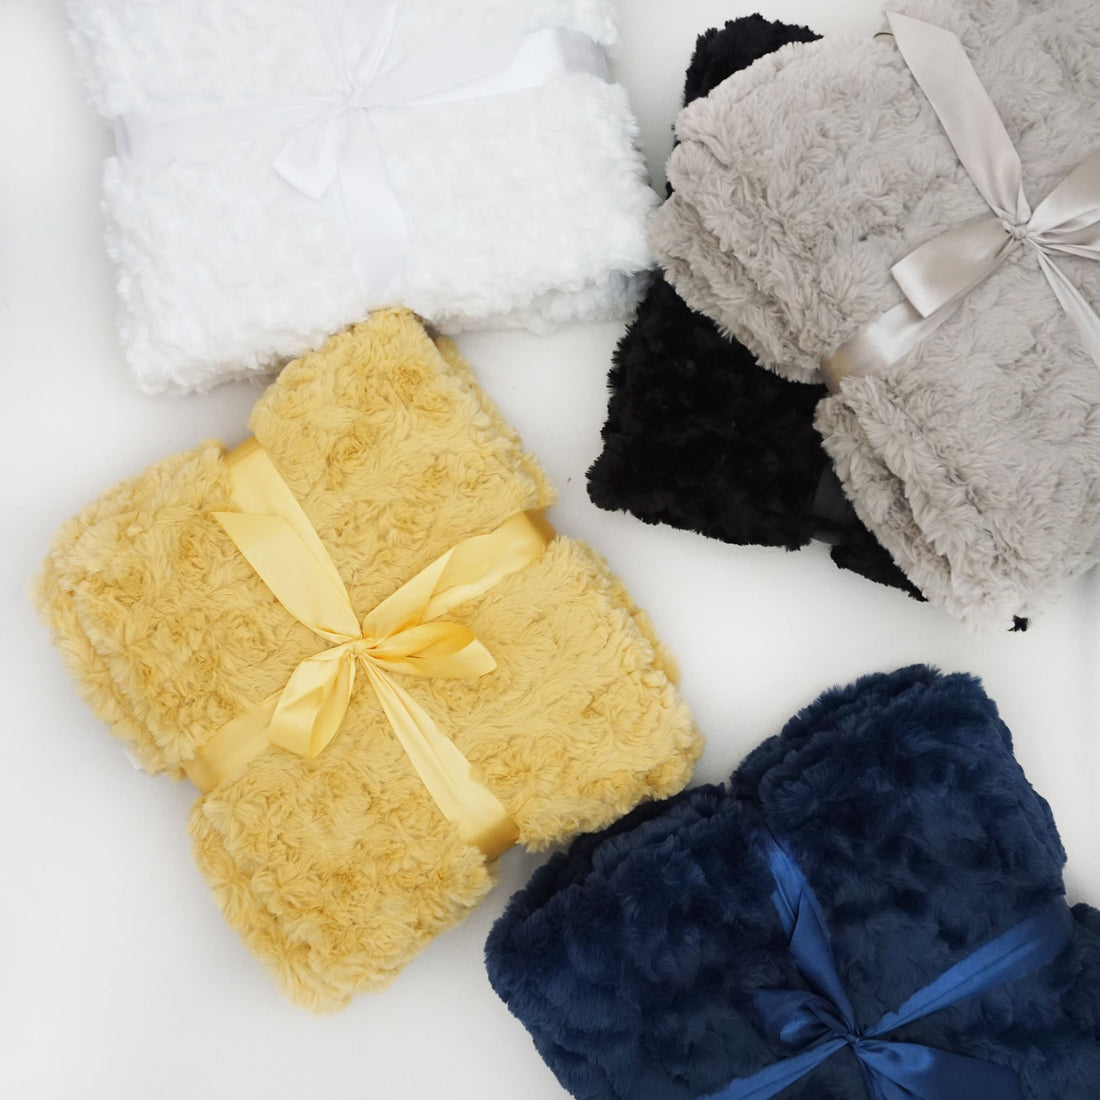 Morgan Faux Fur Throw Blanket | Taupe | 50" x 60"